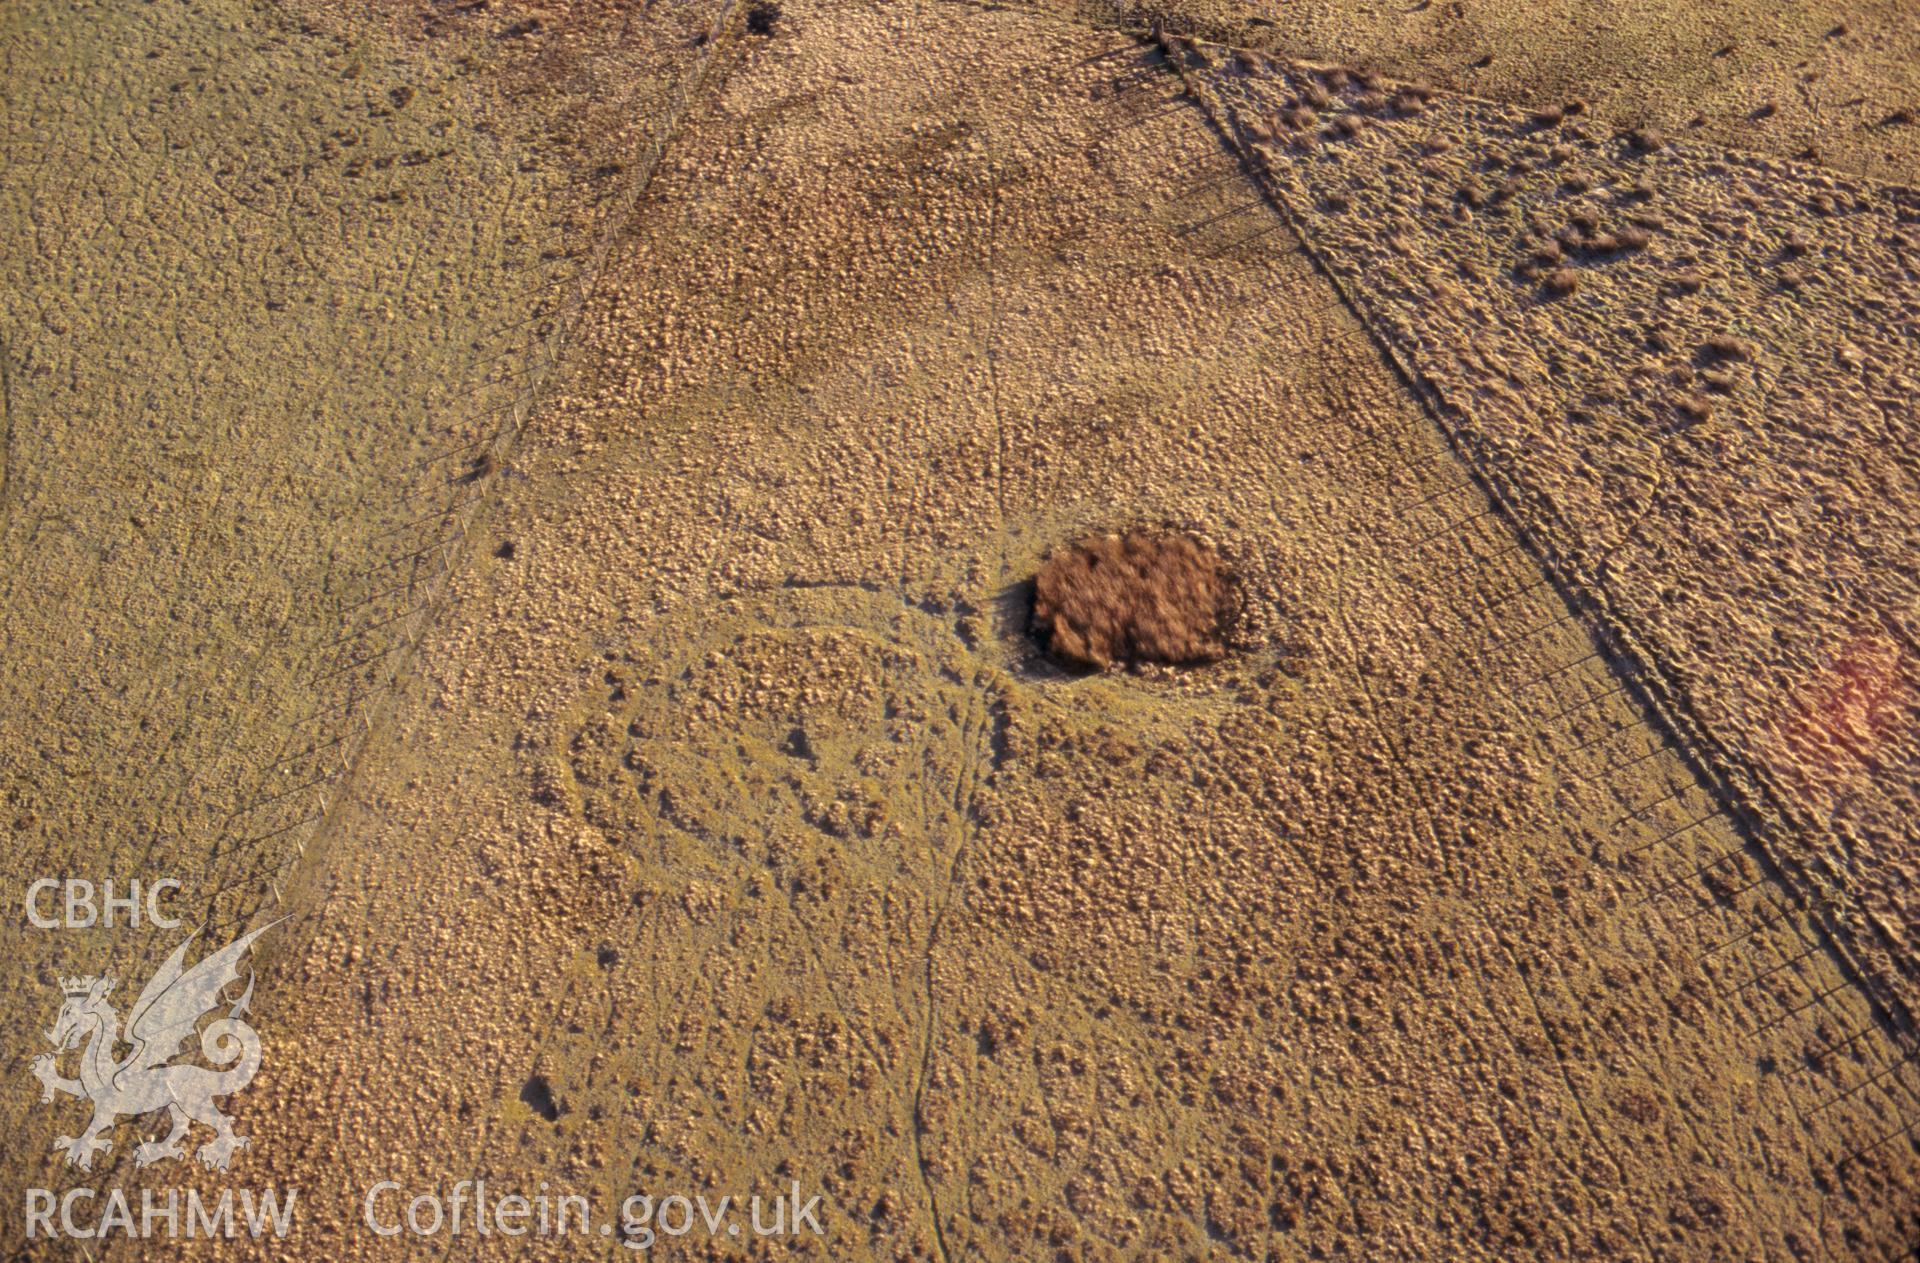 RCAHMW colour slide oblique aerial photograph of Cerrig Gaerau Stone Circle, Llanbrynmair, taken on 20/12/1998 by CR Musson